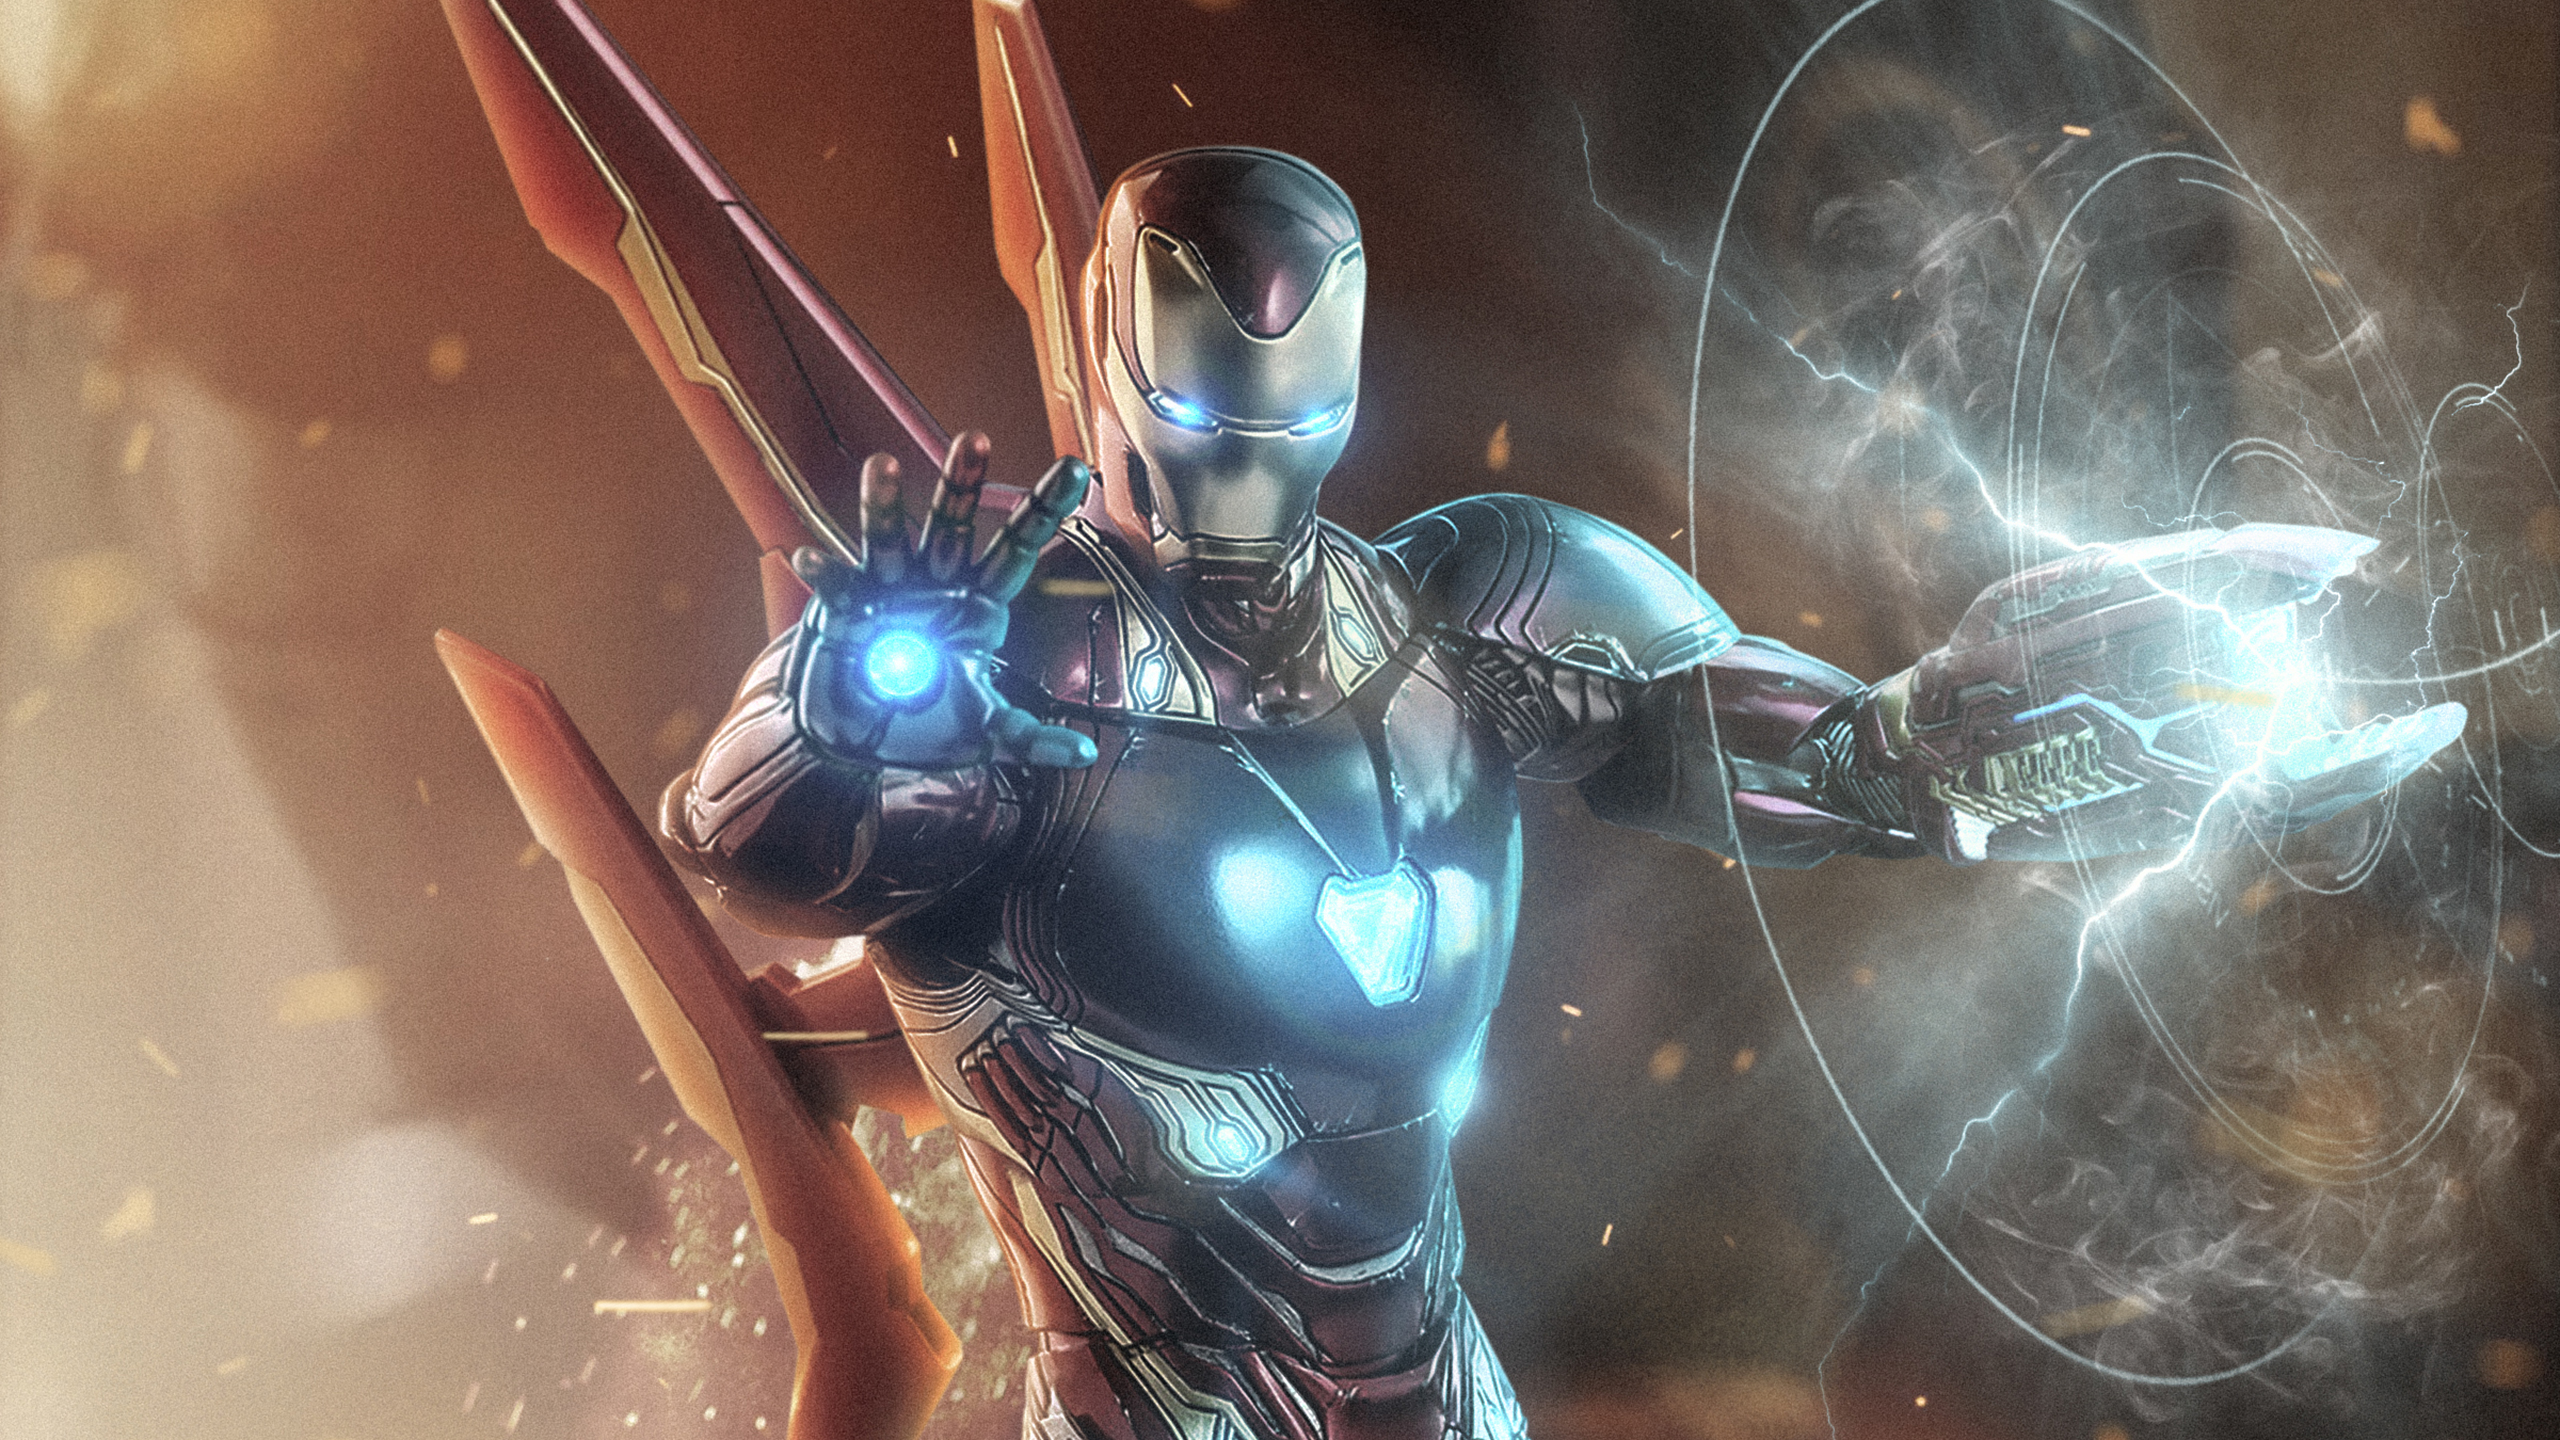 Iron Man in Avengers 4